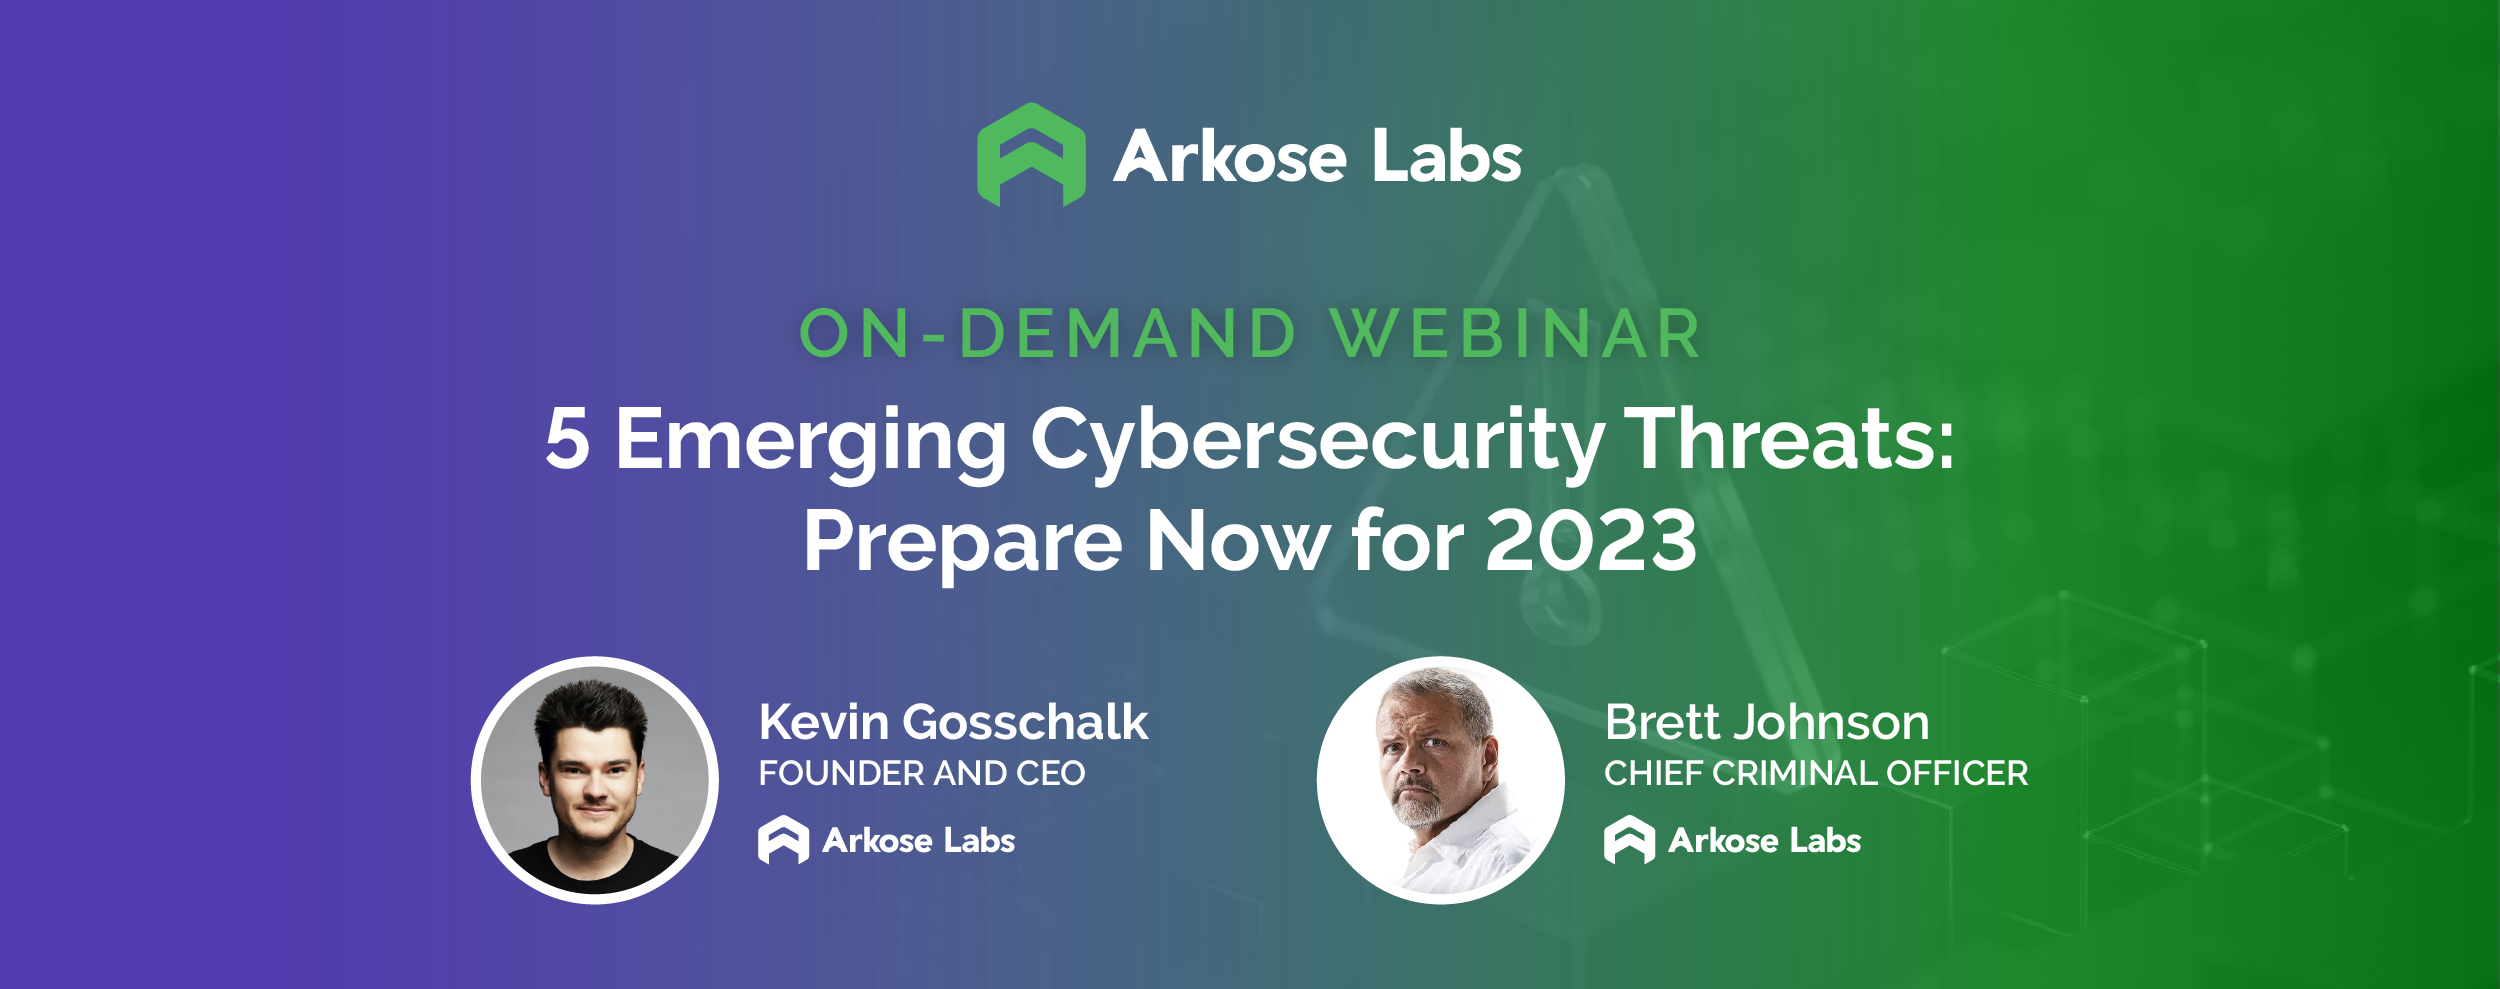 Emerging Cybersecurity Threats in 2023 webinar